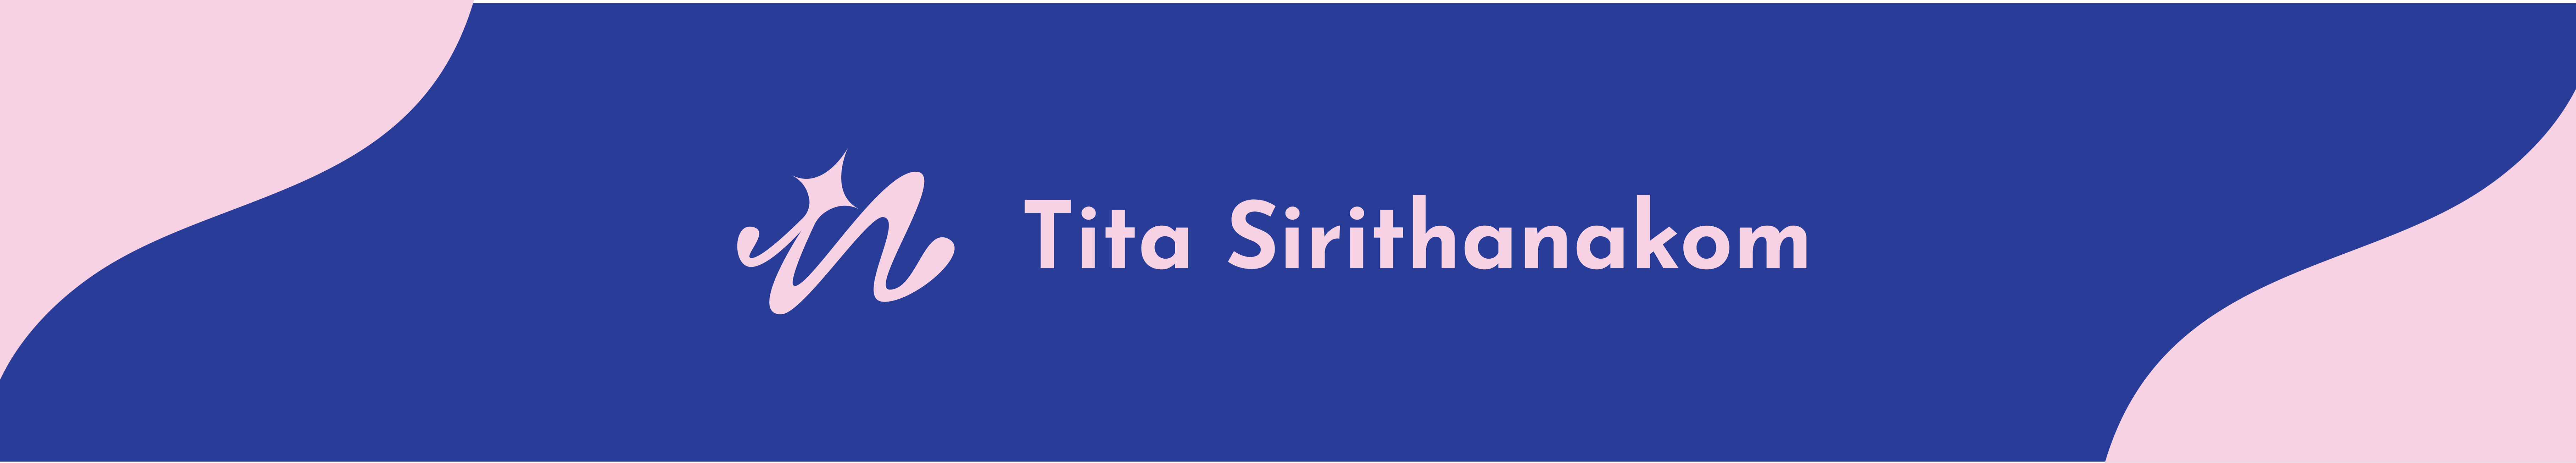 Tita Sirithankom's profile banner